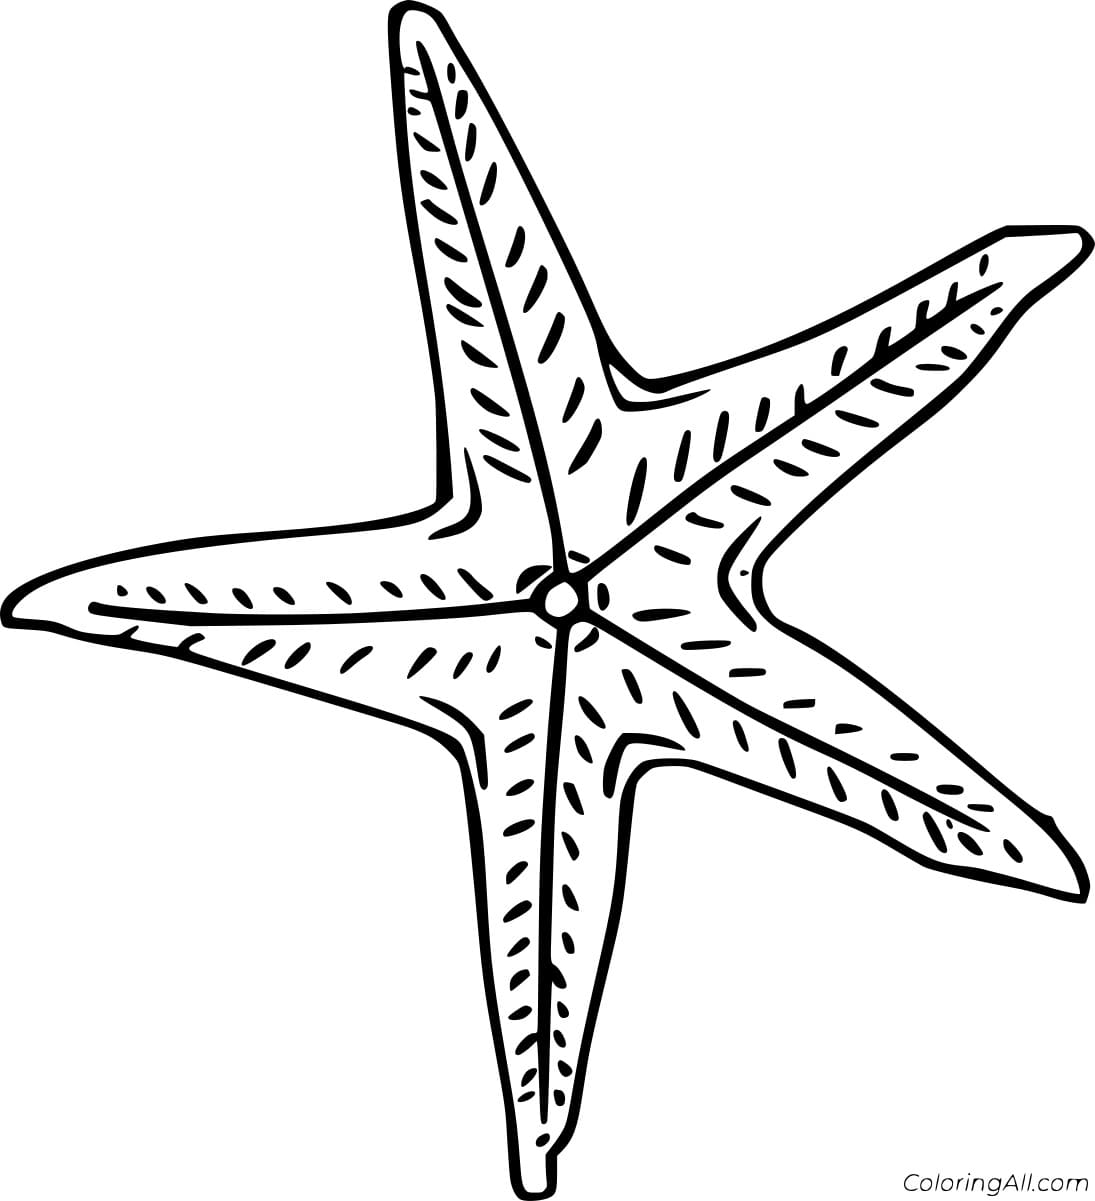 Морская звезда схематично